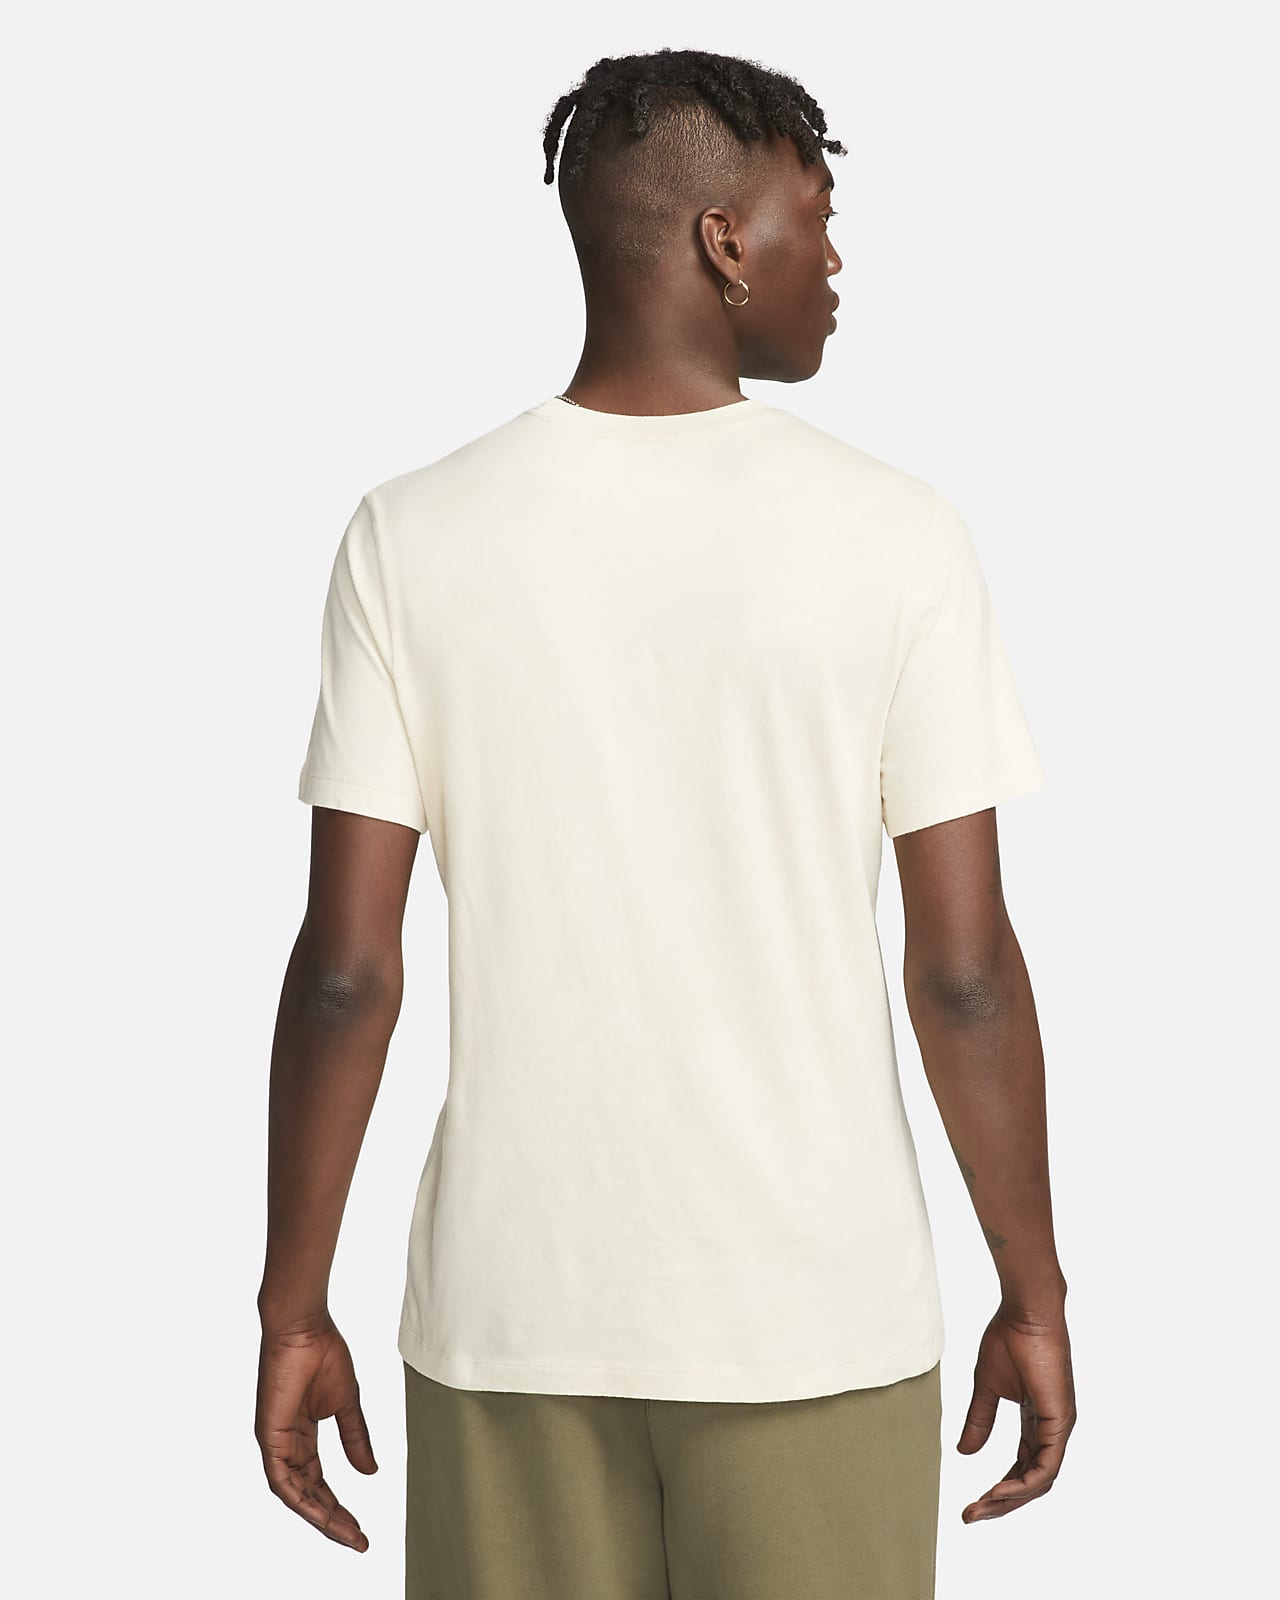 Men\'s Nike T-Shirt. Washed-Dye Sportswear Club